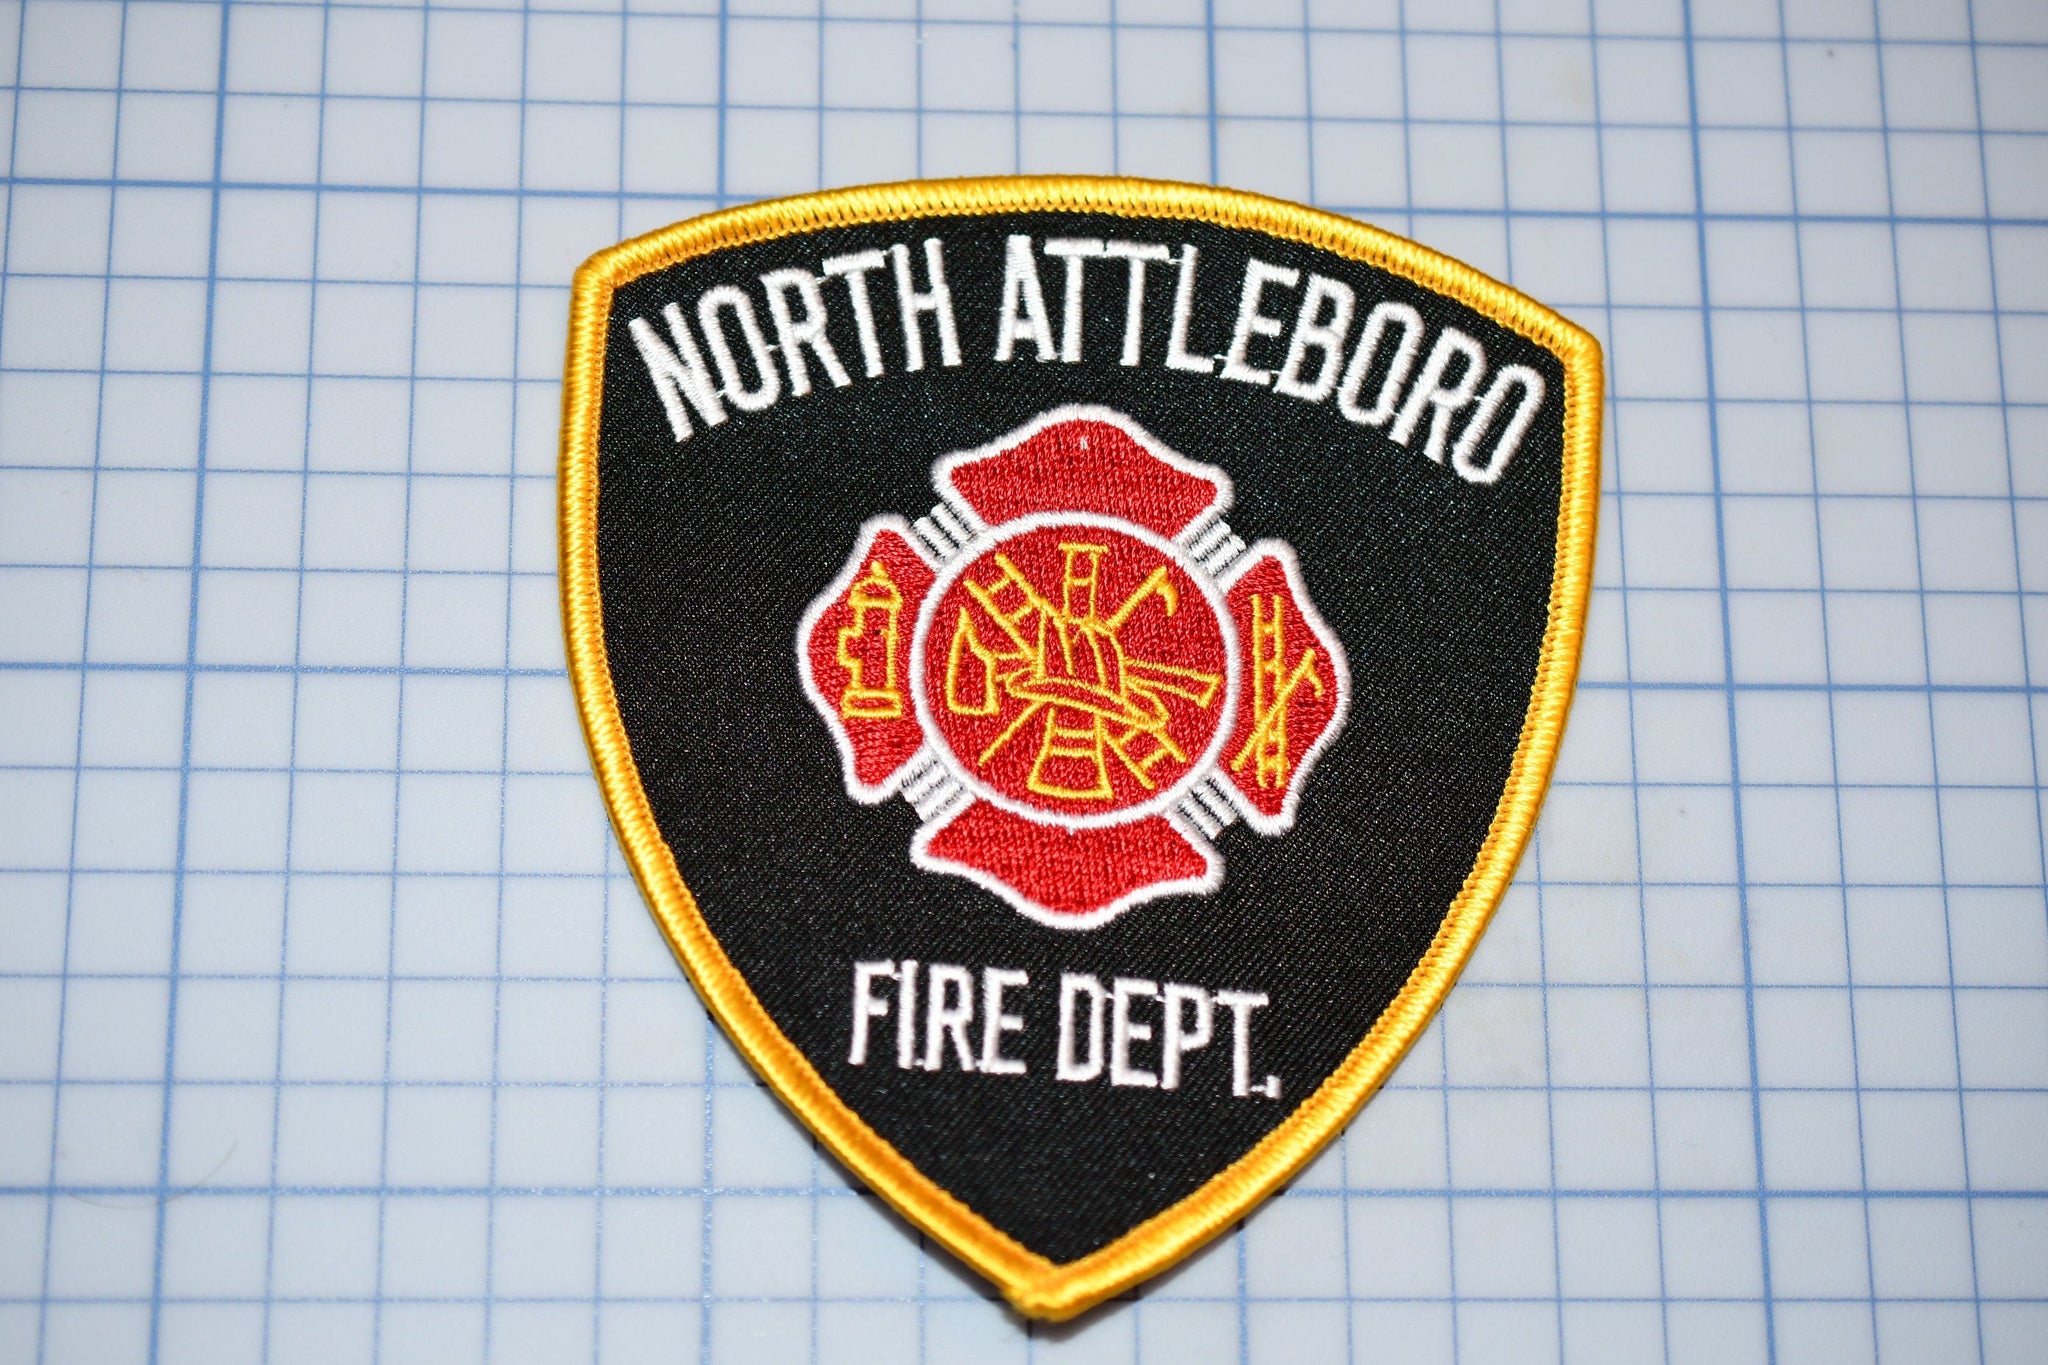 North Attleboro Massachusetts Fire Department Patch (B23-324)